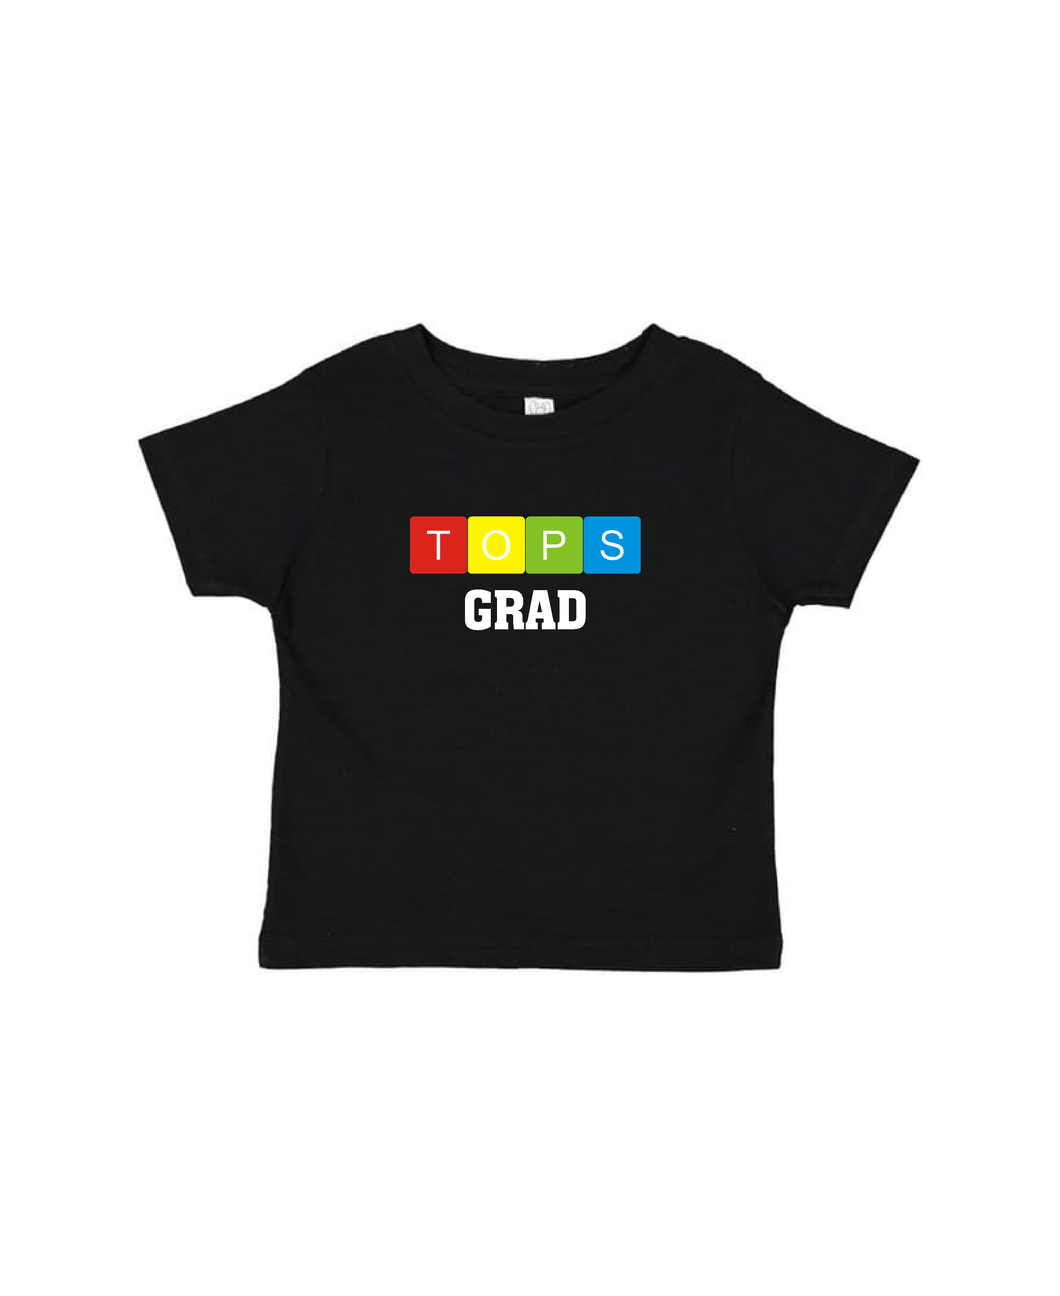 Black Toddler Short Sleeve T-Shirt - GRAD with TOPS blocks logo